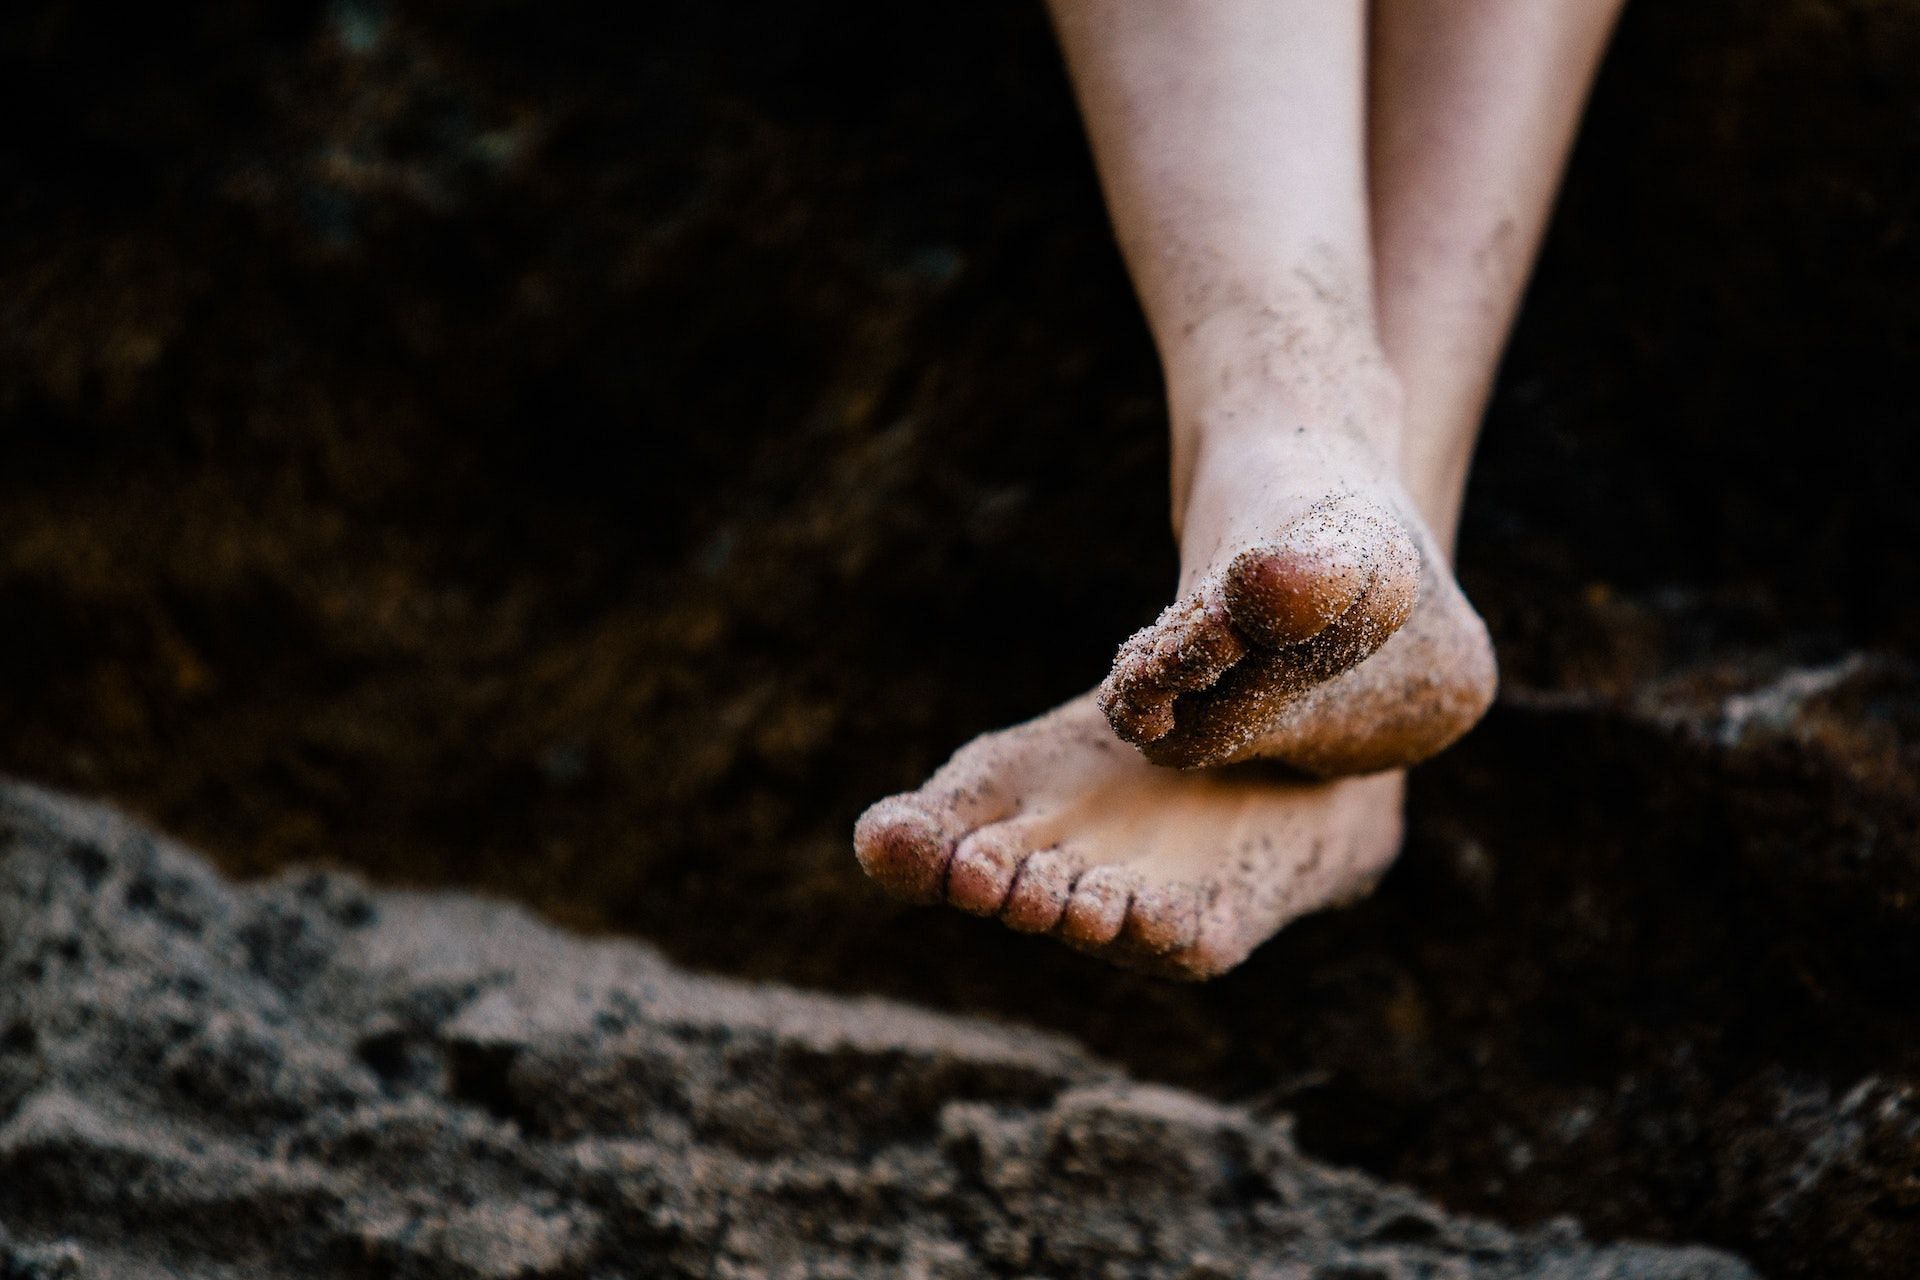 Walking barefoot can cause cracked heels. (Photo via Pexels/Isaac Taylor)